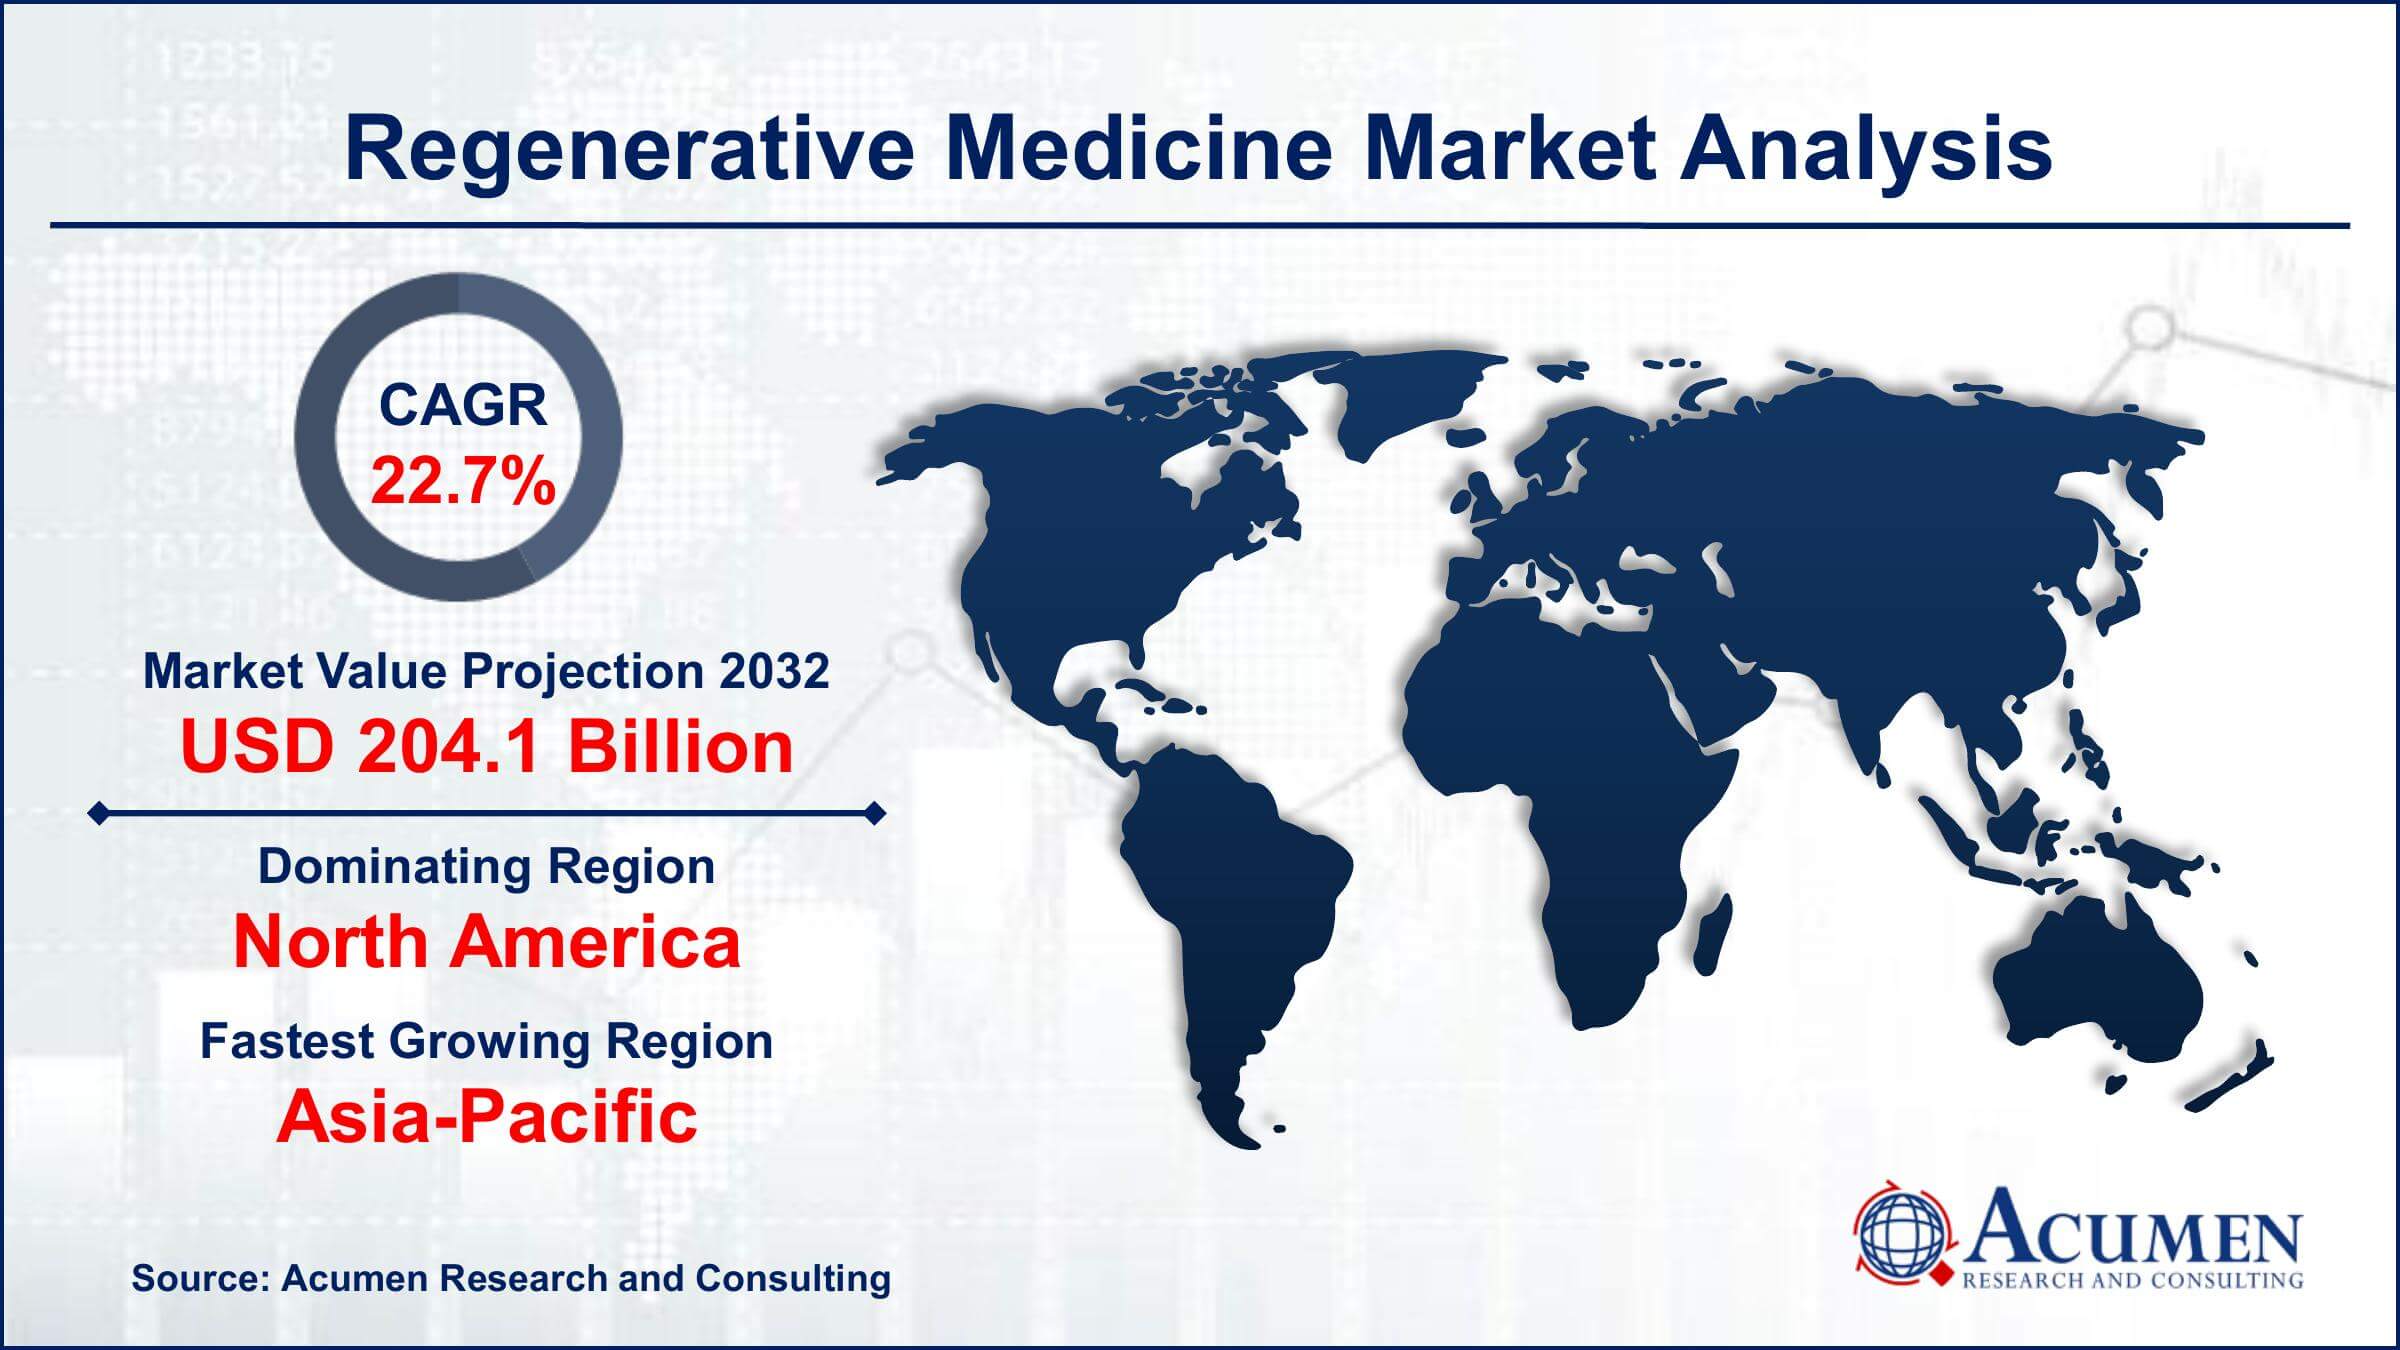 Global Regenerative Medicine Market Trends